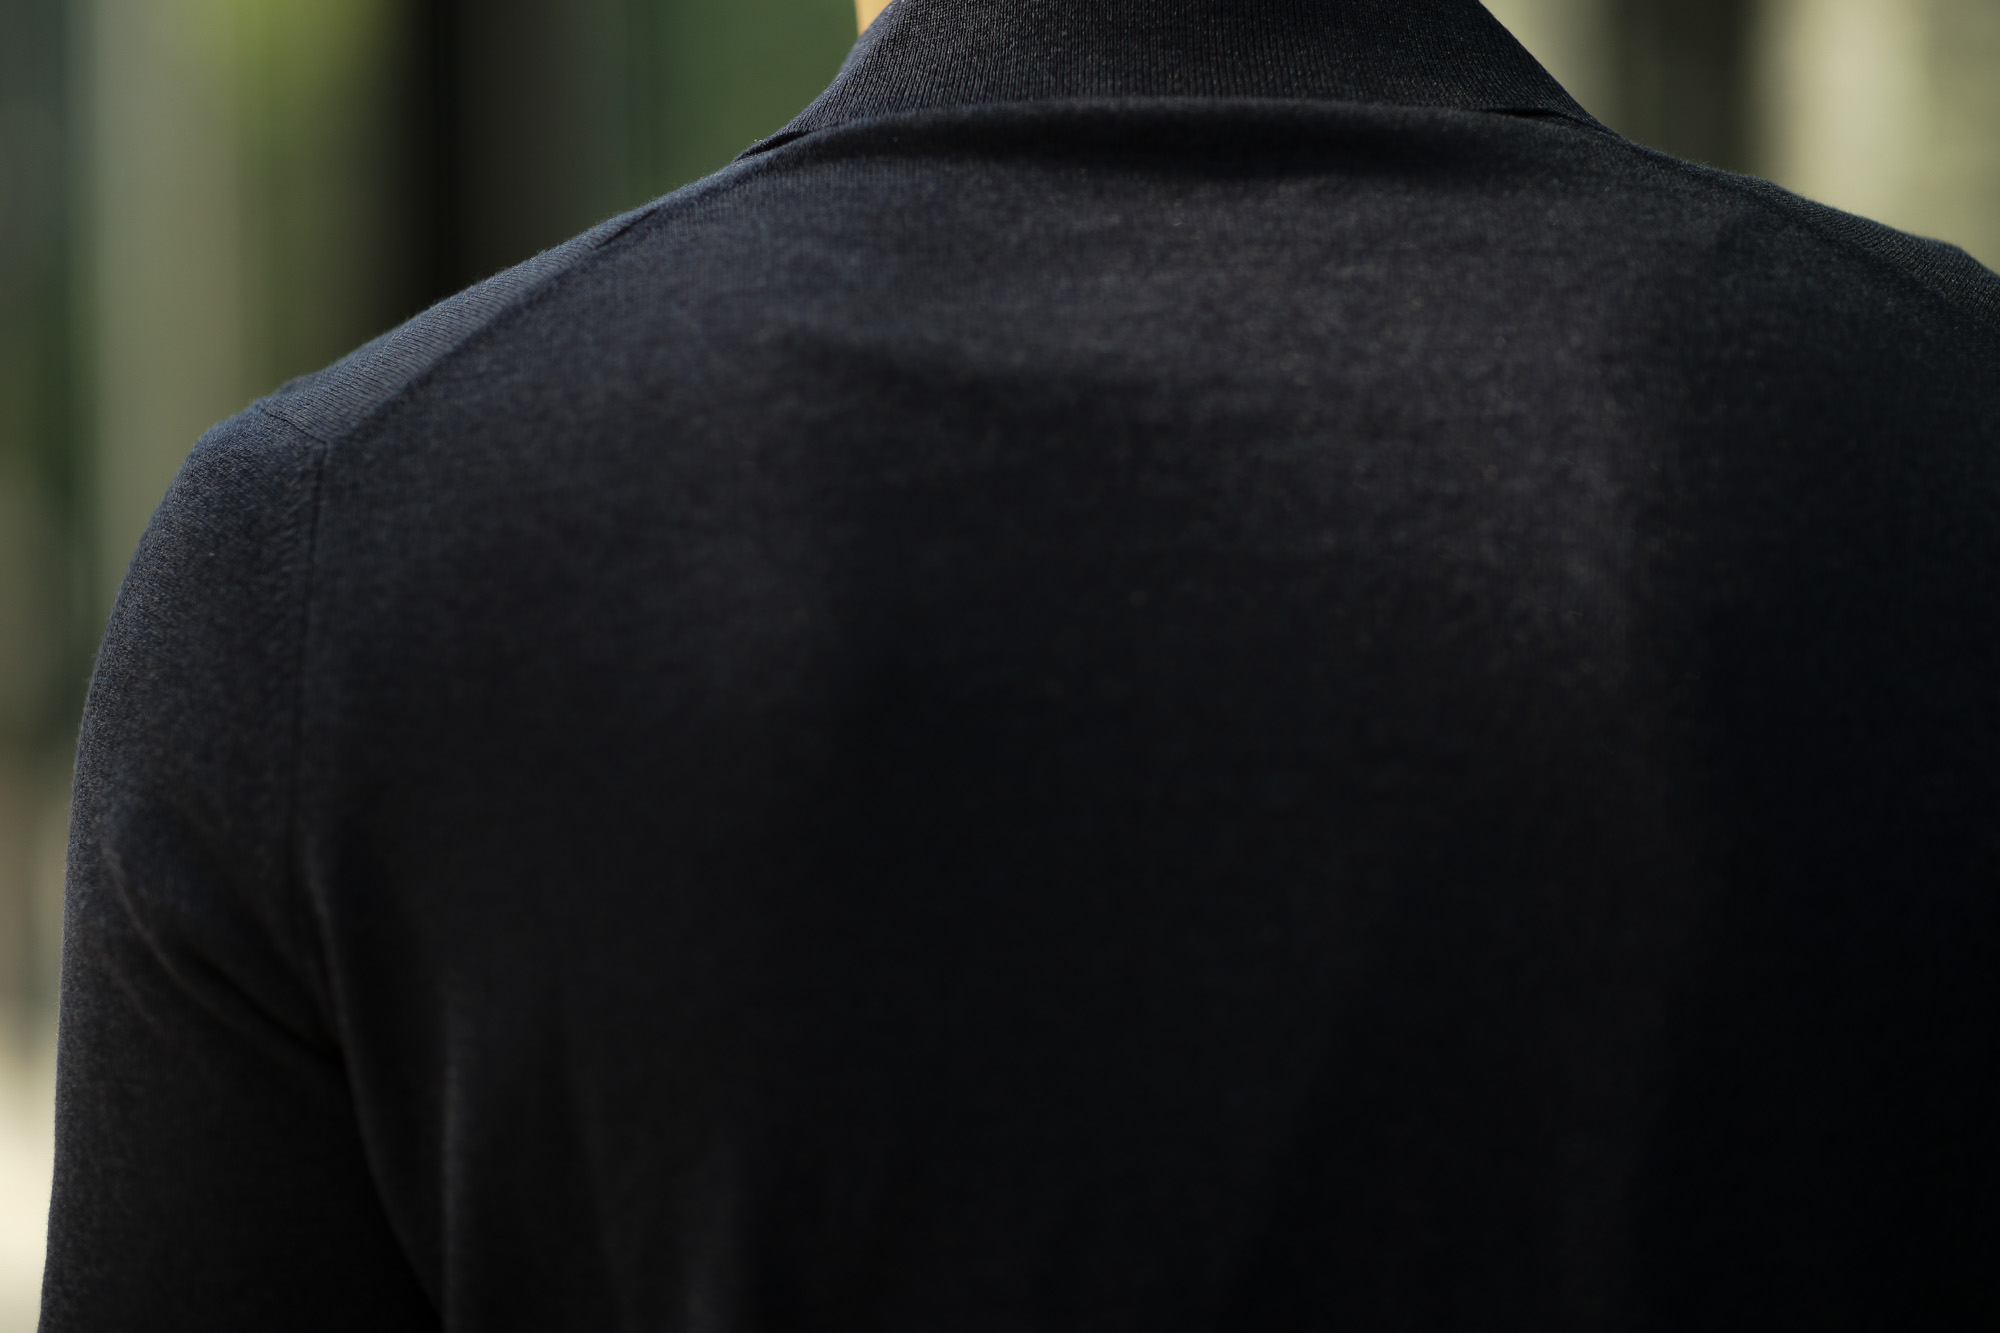 Gran Sasso (グランサッソ) Silk Knit Polo Shirt (シルクニットポロシャツ) SETA (シルク 100%) シルク ニット ポロシャツ NAVY (ネイビー・597) made in italy (イタリア製) 2020 春夏新作 愛知 名古屋 altoediritto アルトエデリット